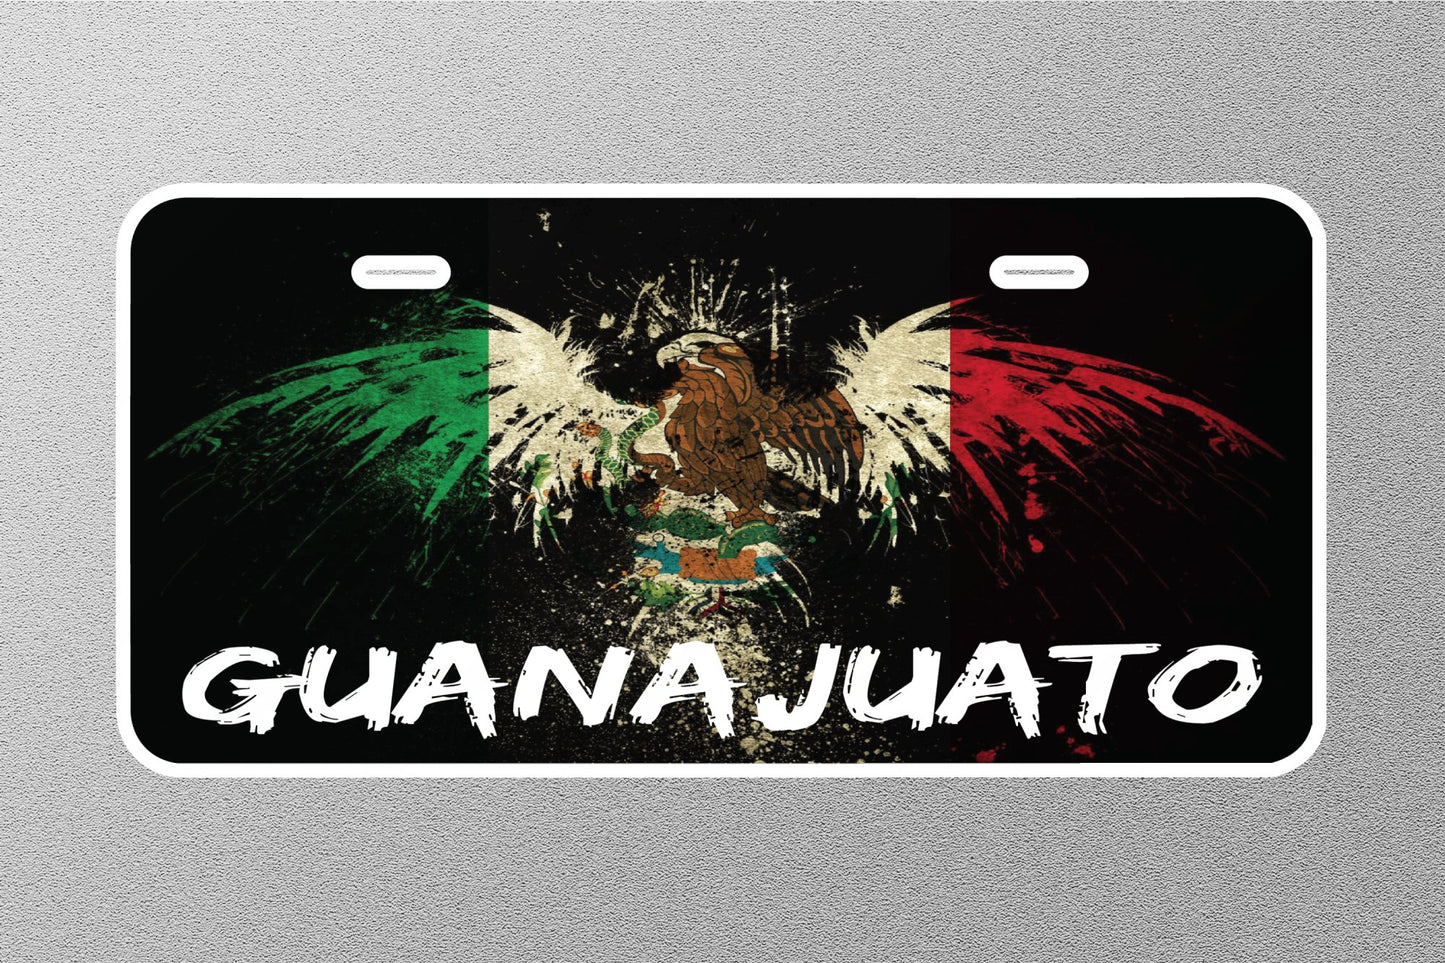 GUANAJAUTO Mexico Licence Plate Sticker